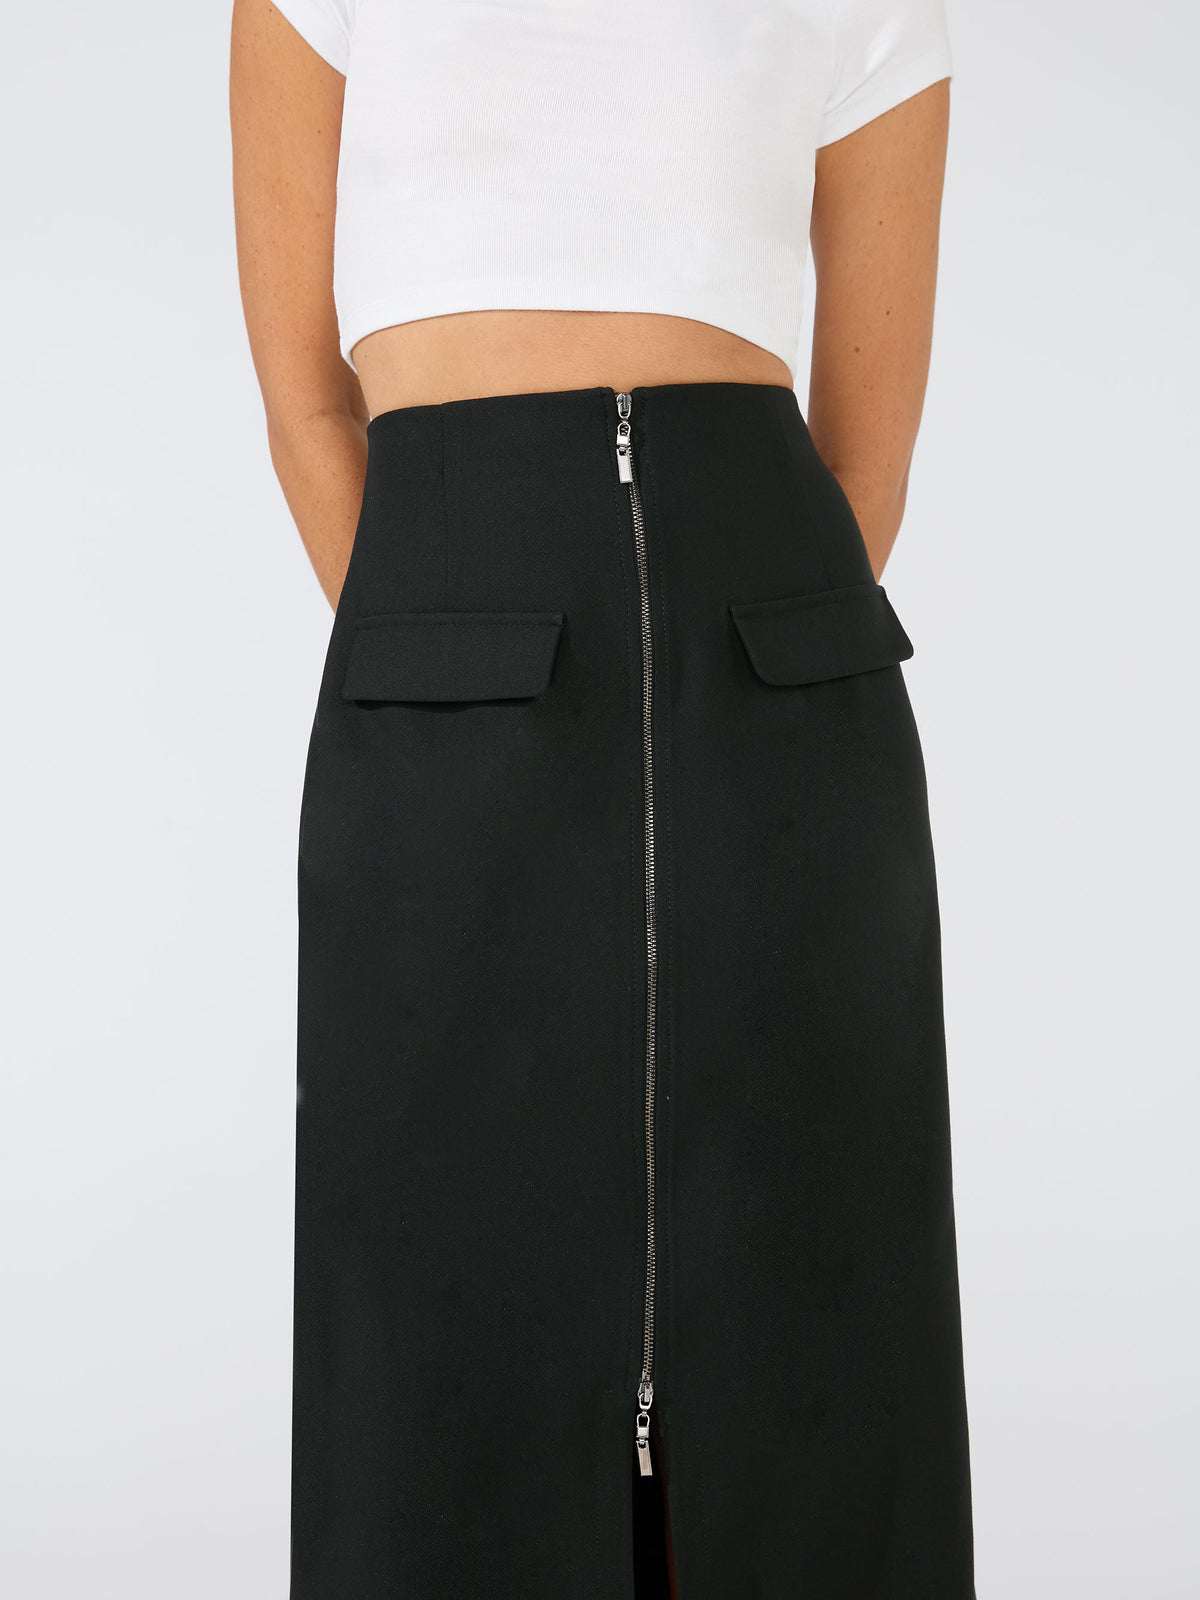 Petite Black Zip Detail Utility Skirt